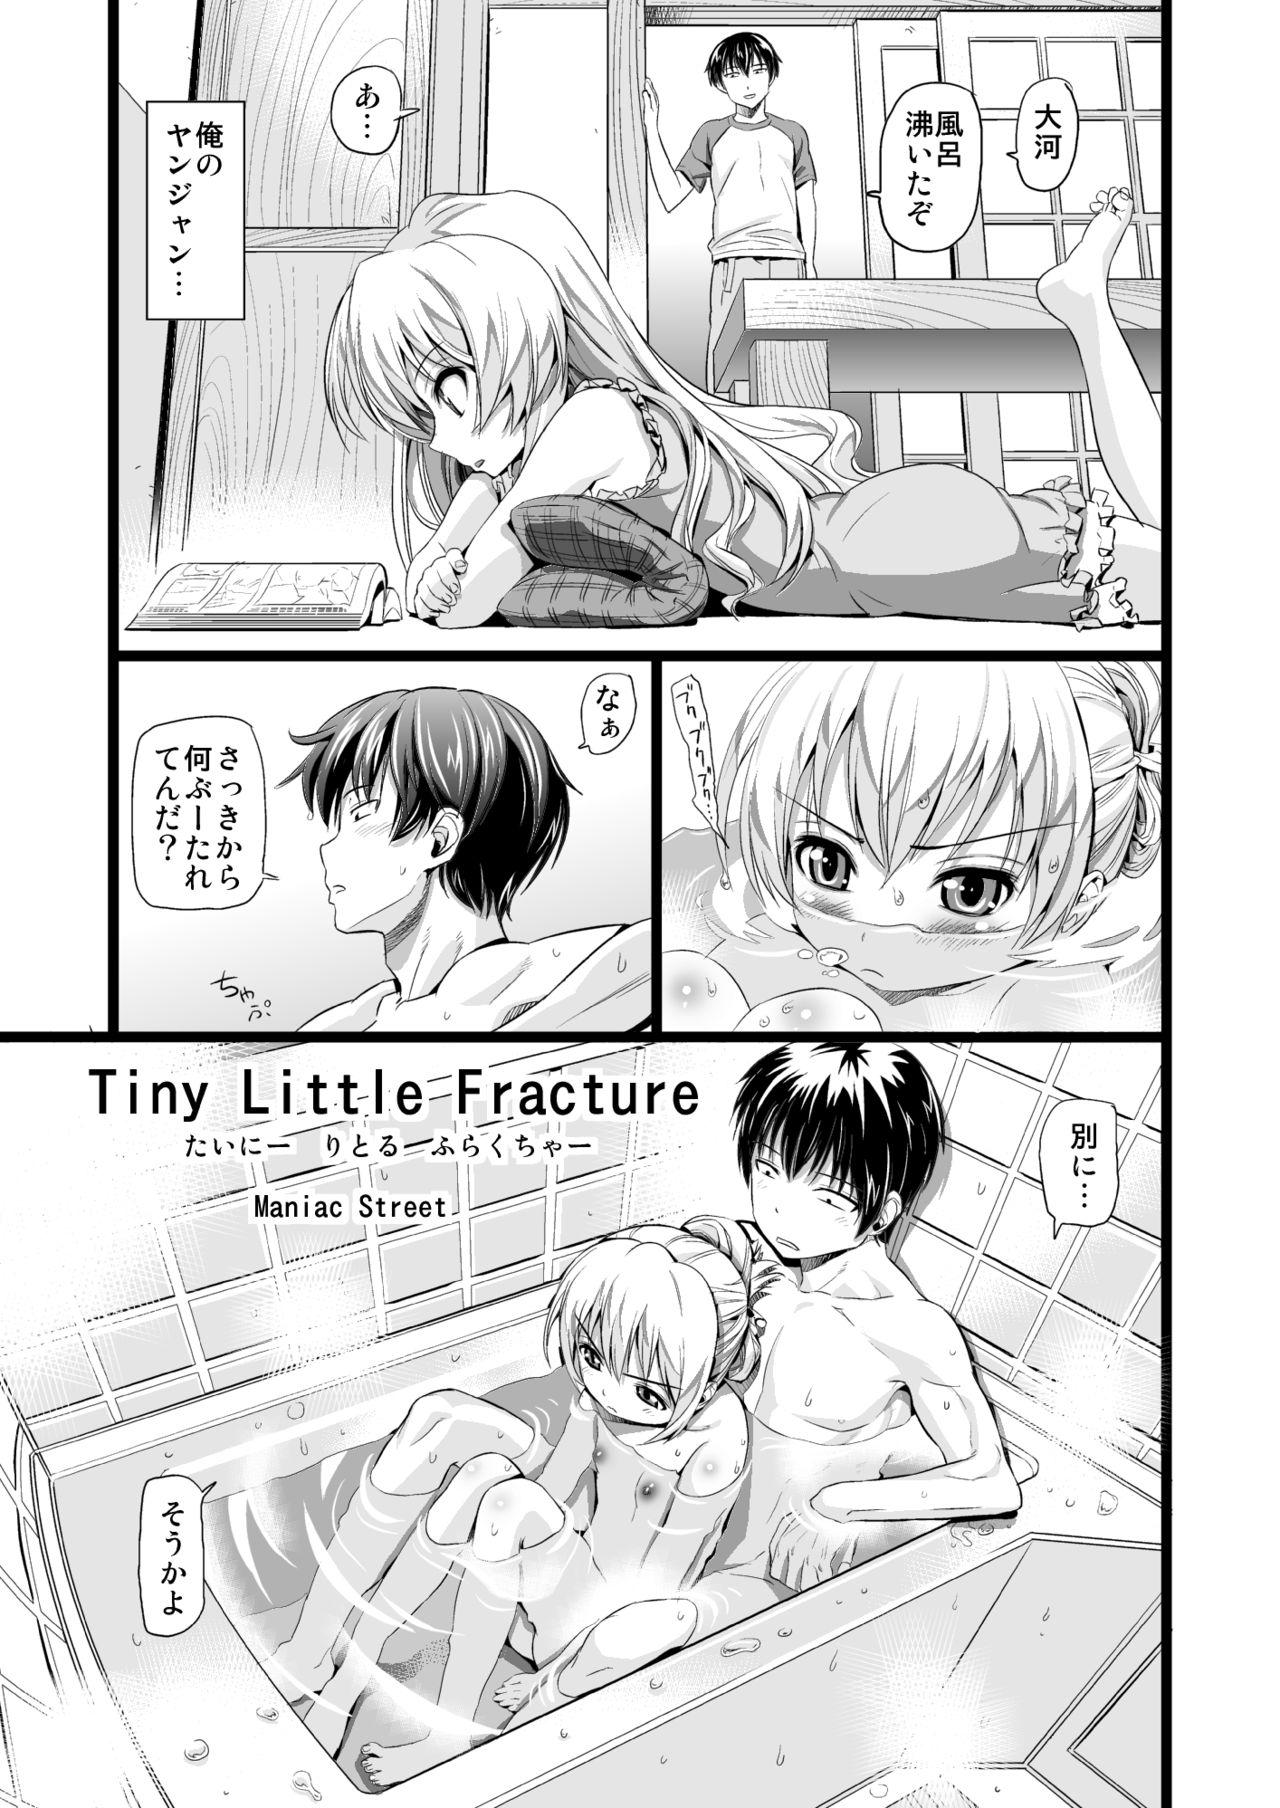 Sfm Tiny Little Fracture - Toradora Boobs - Page 2